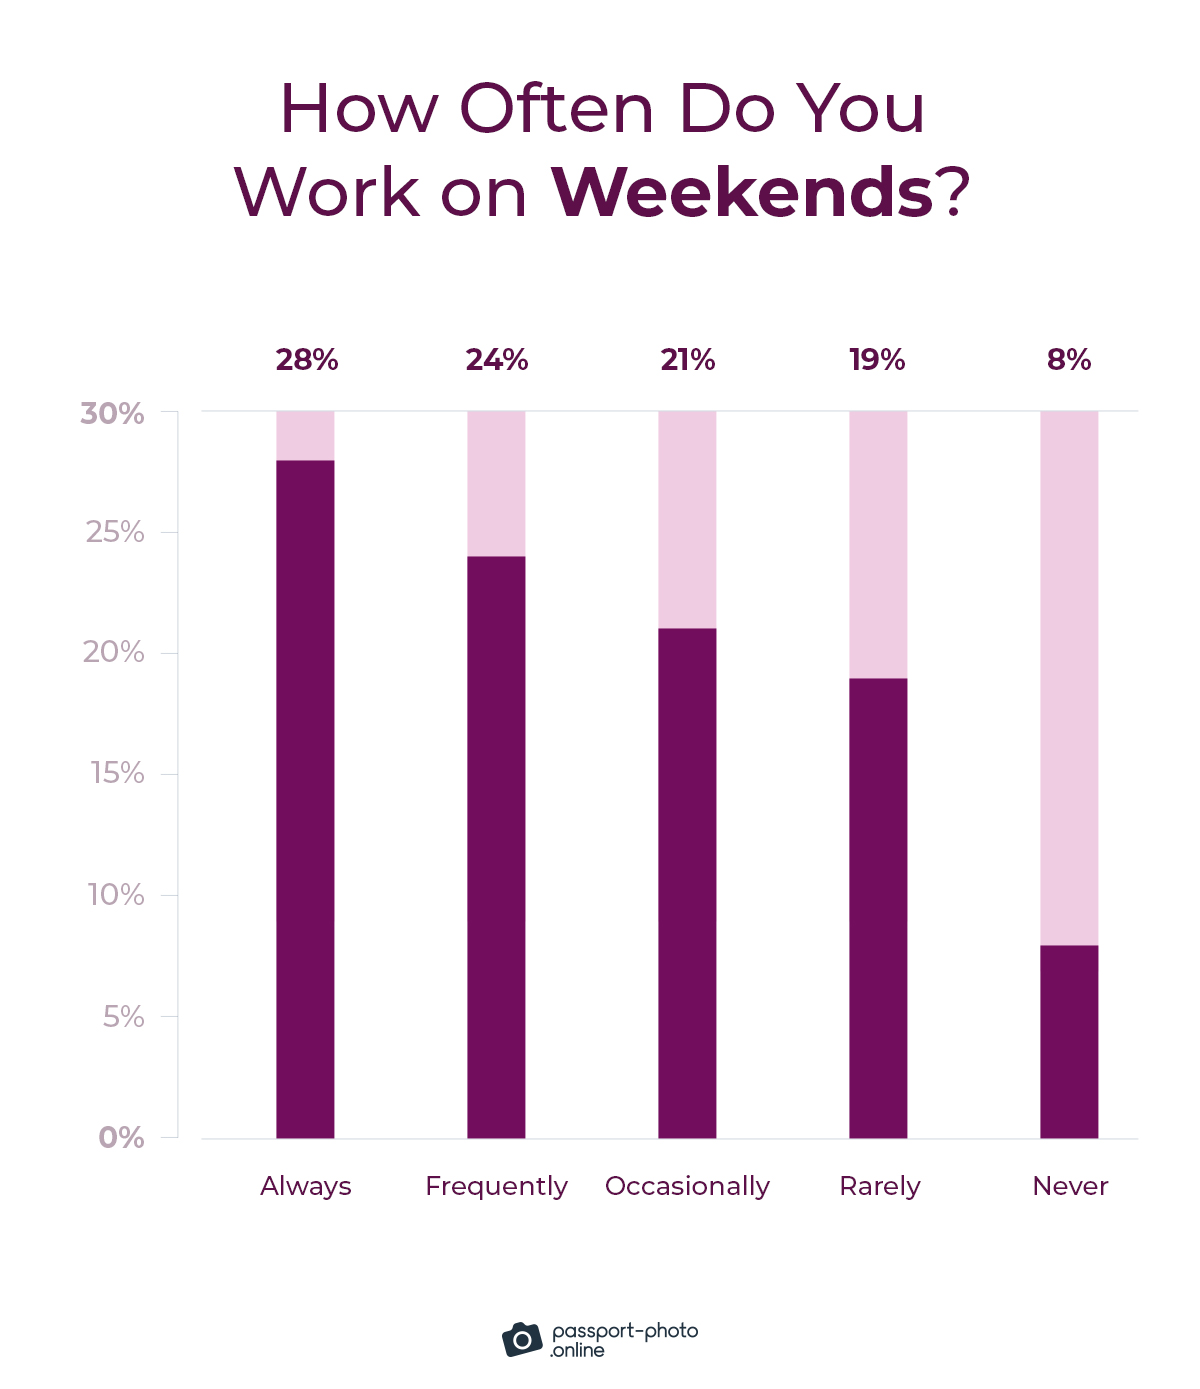 52% of digital nomads often or always work on weekends